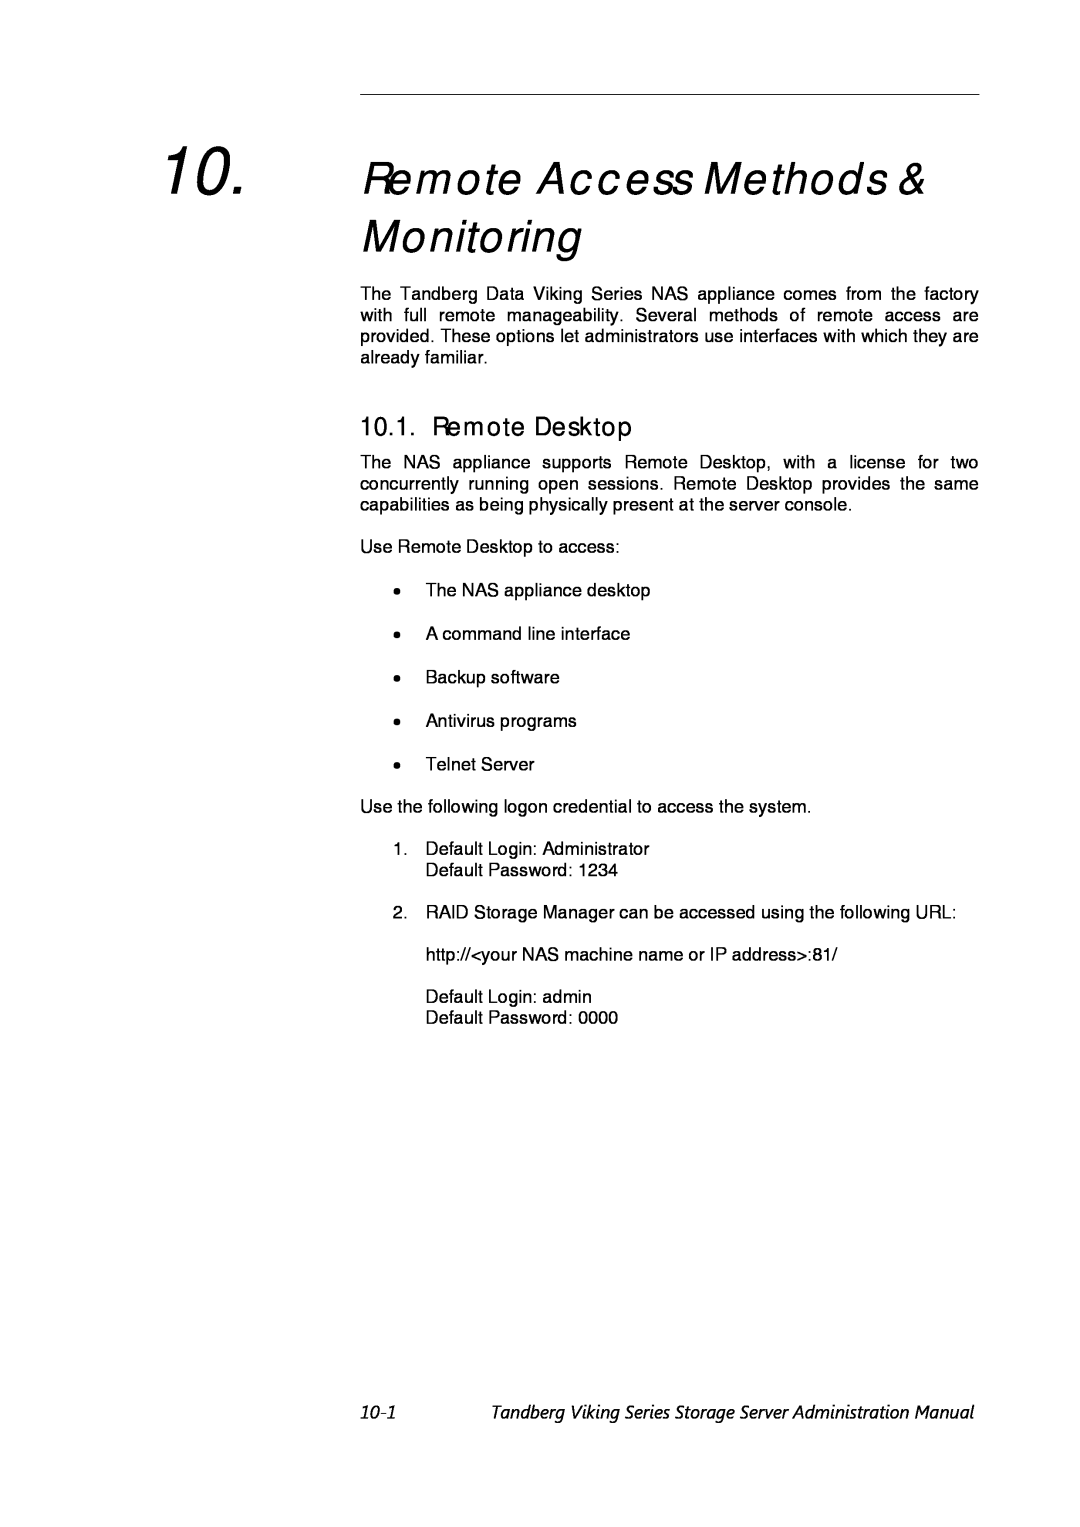 Tandberg Data Viking FS-412, Viking FS-1600, Viking FS-1500 manual Remote Access Methods & Monitoring, Remote Desktop, 10-1 